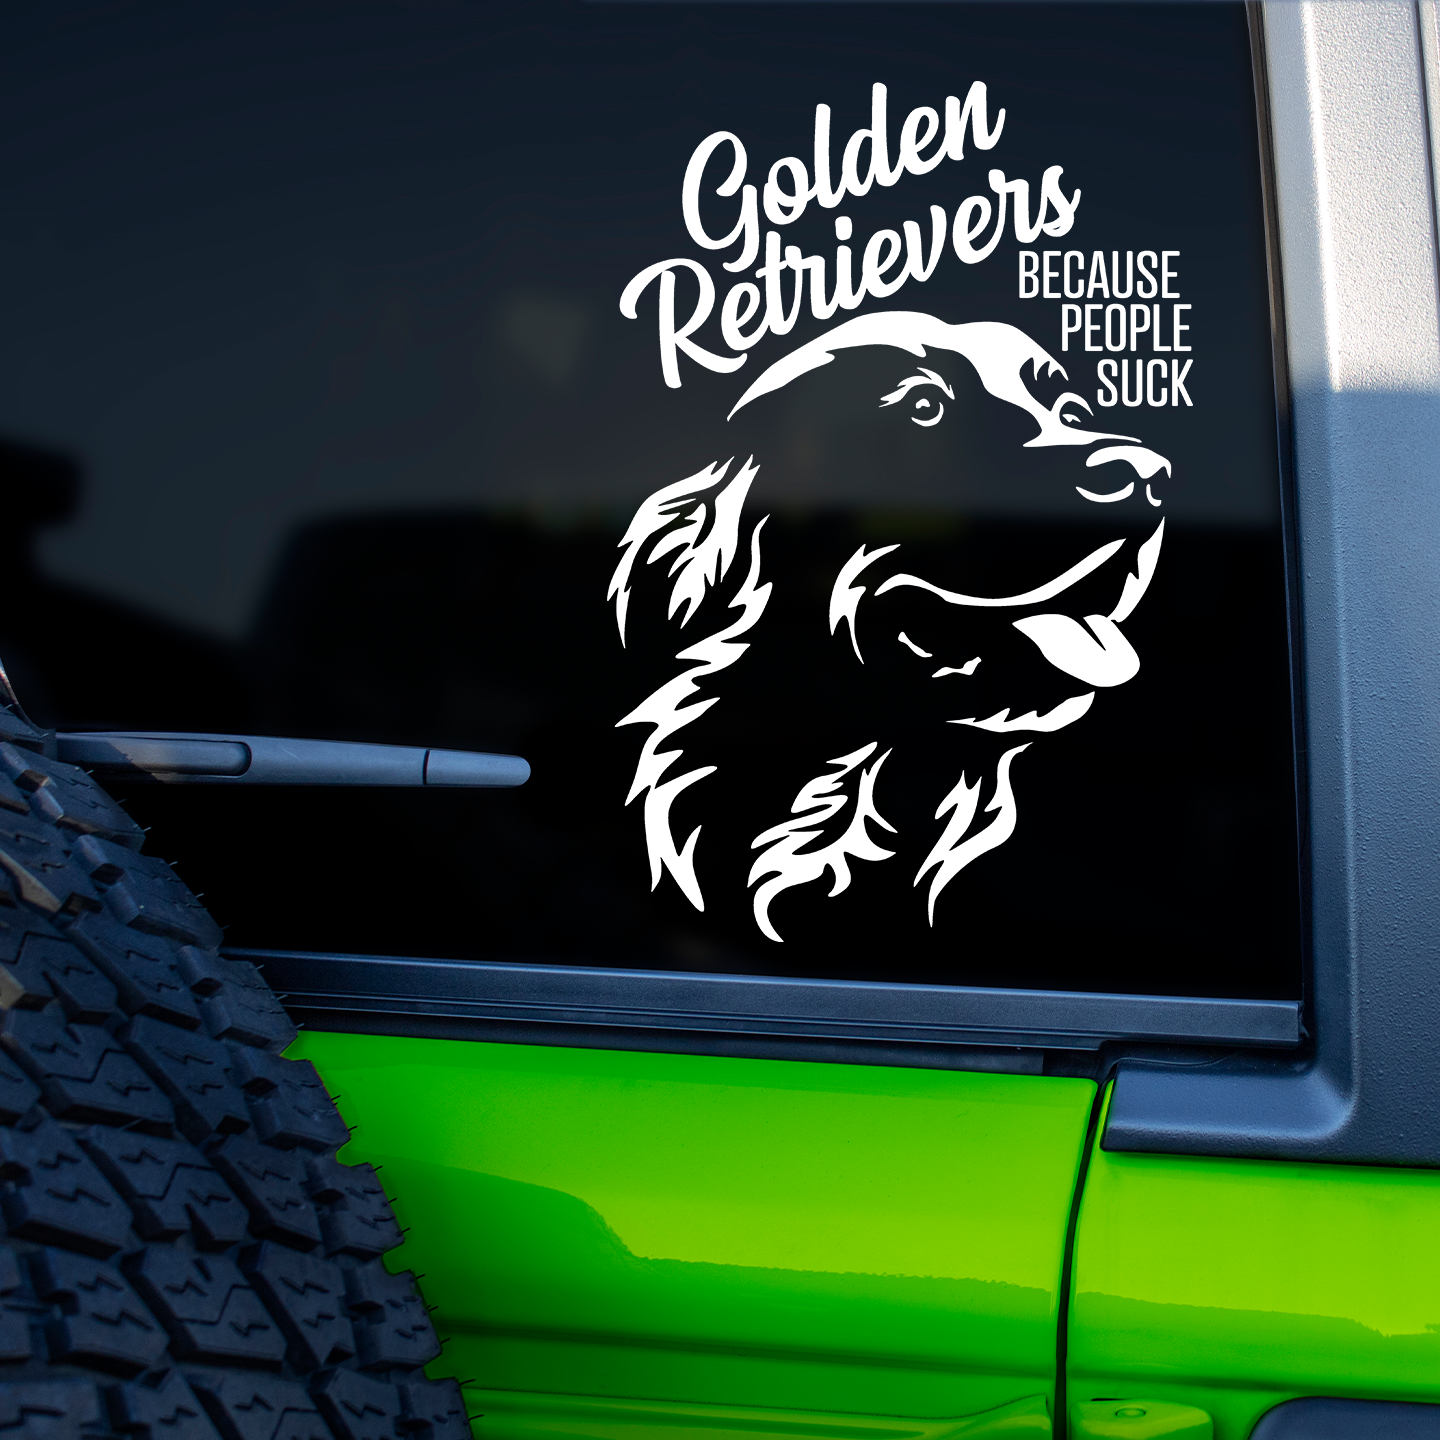 Golden Retrievers Because People Suck Sticker